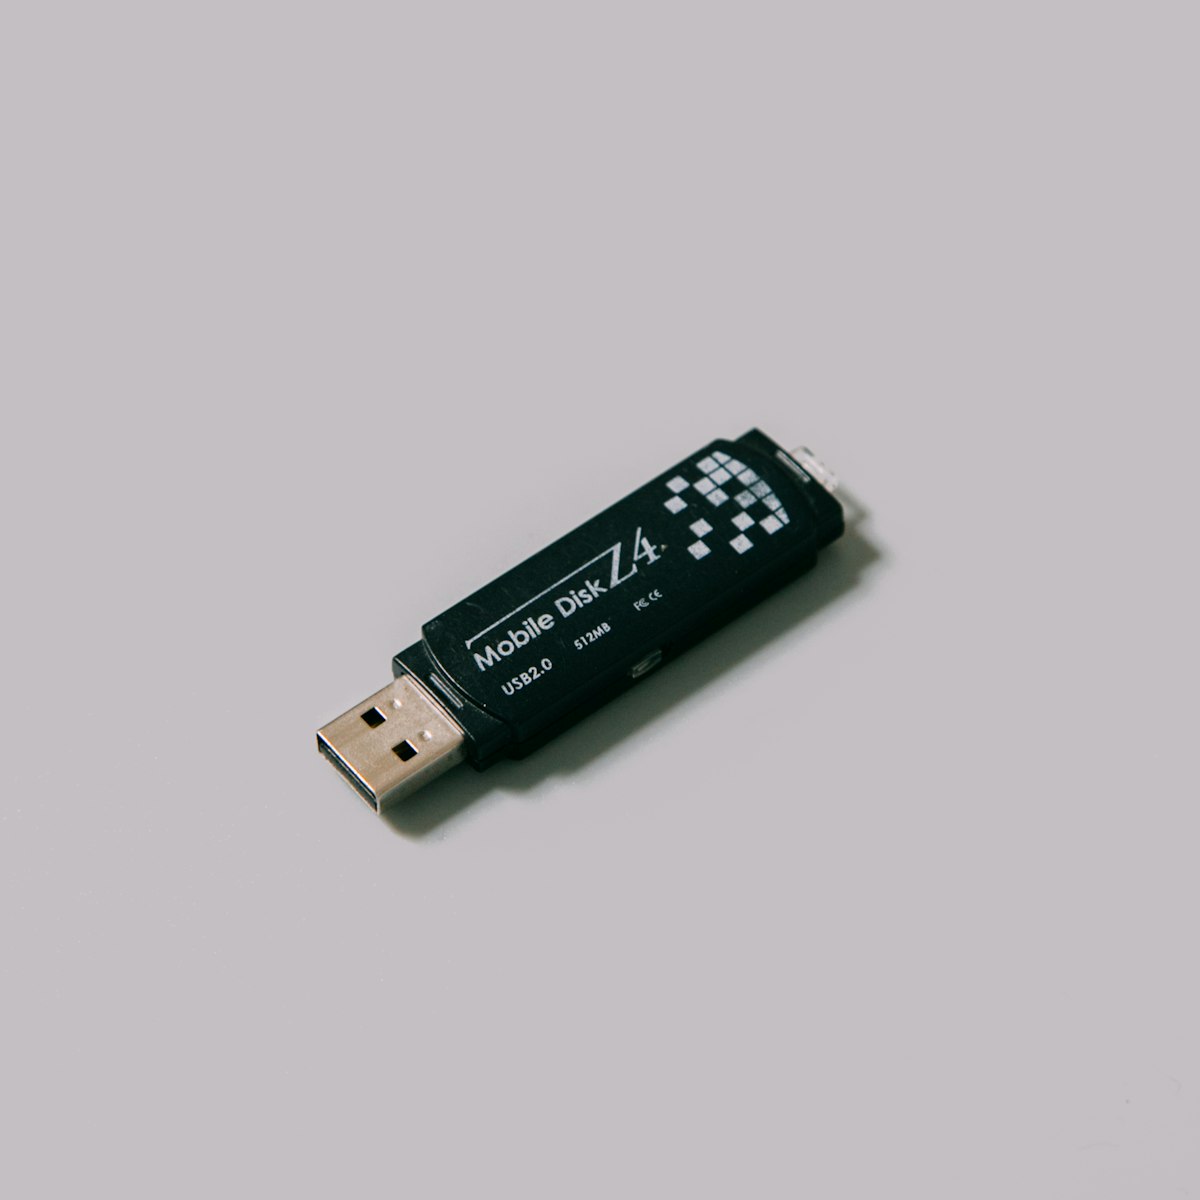 Free USB Stick Repair Tool